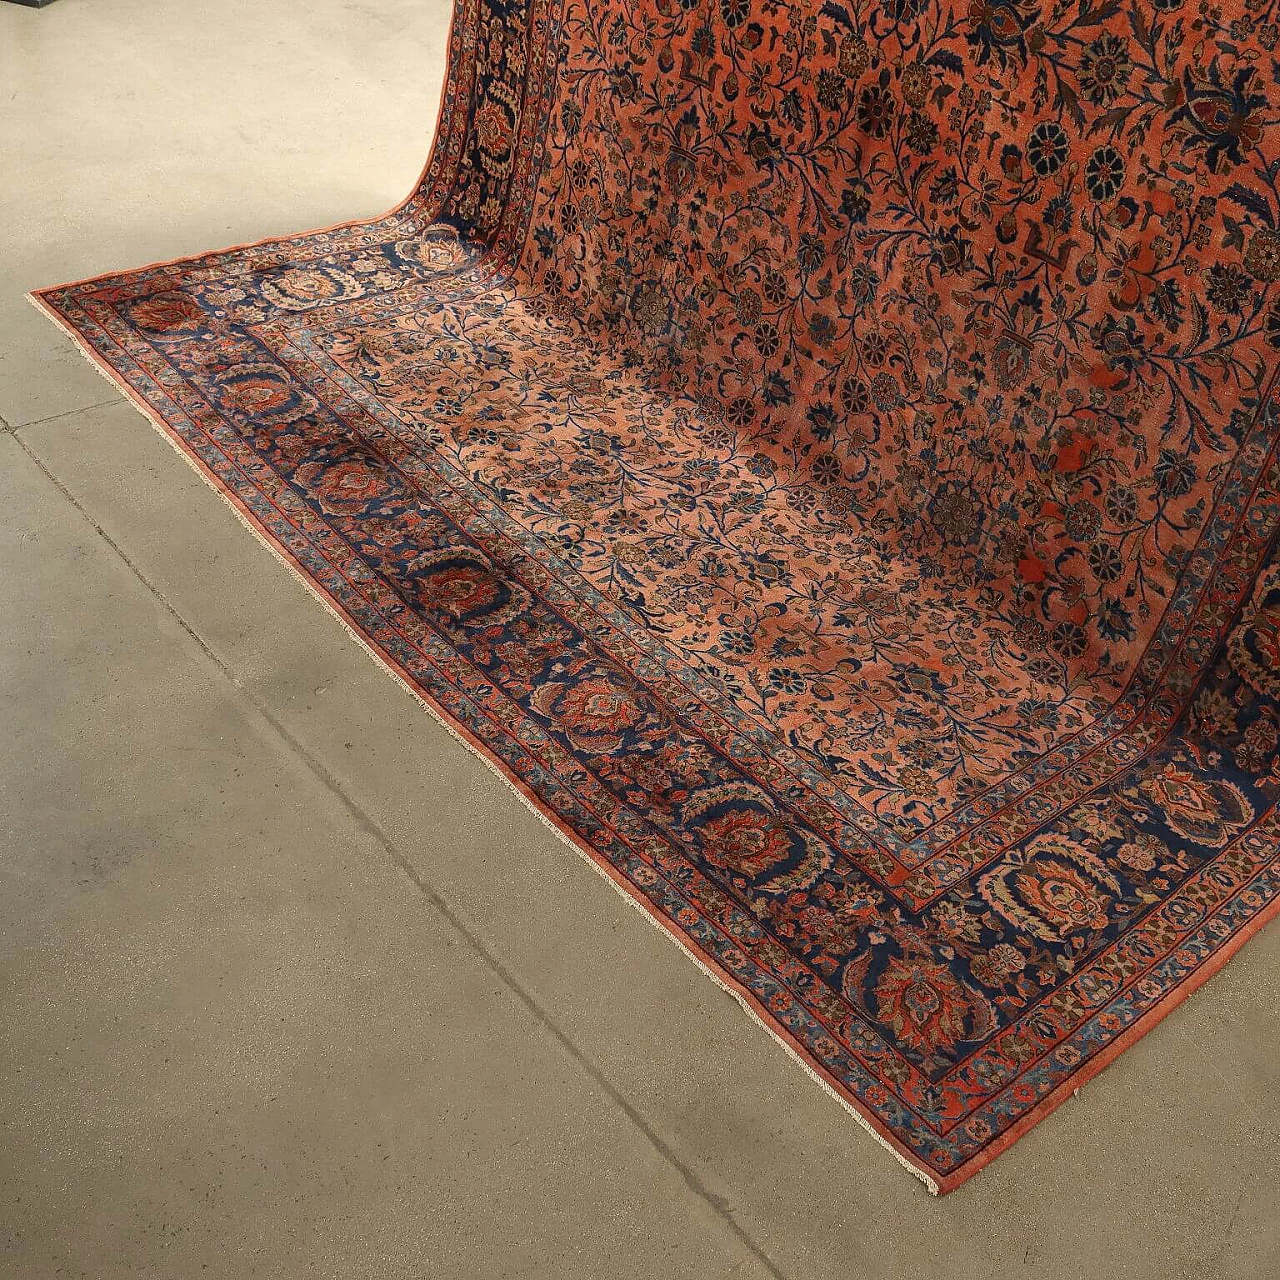 Iranian Keshan Manchester cotton and wool carpet 9